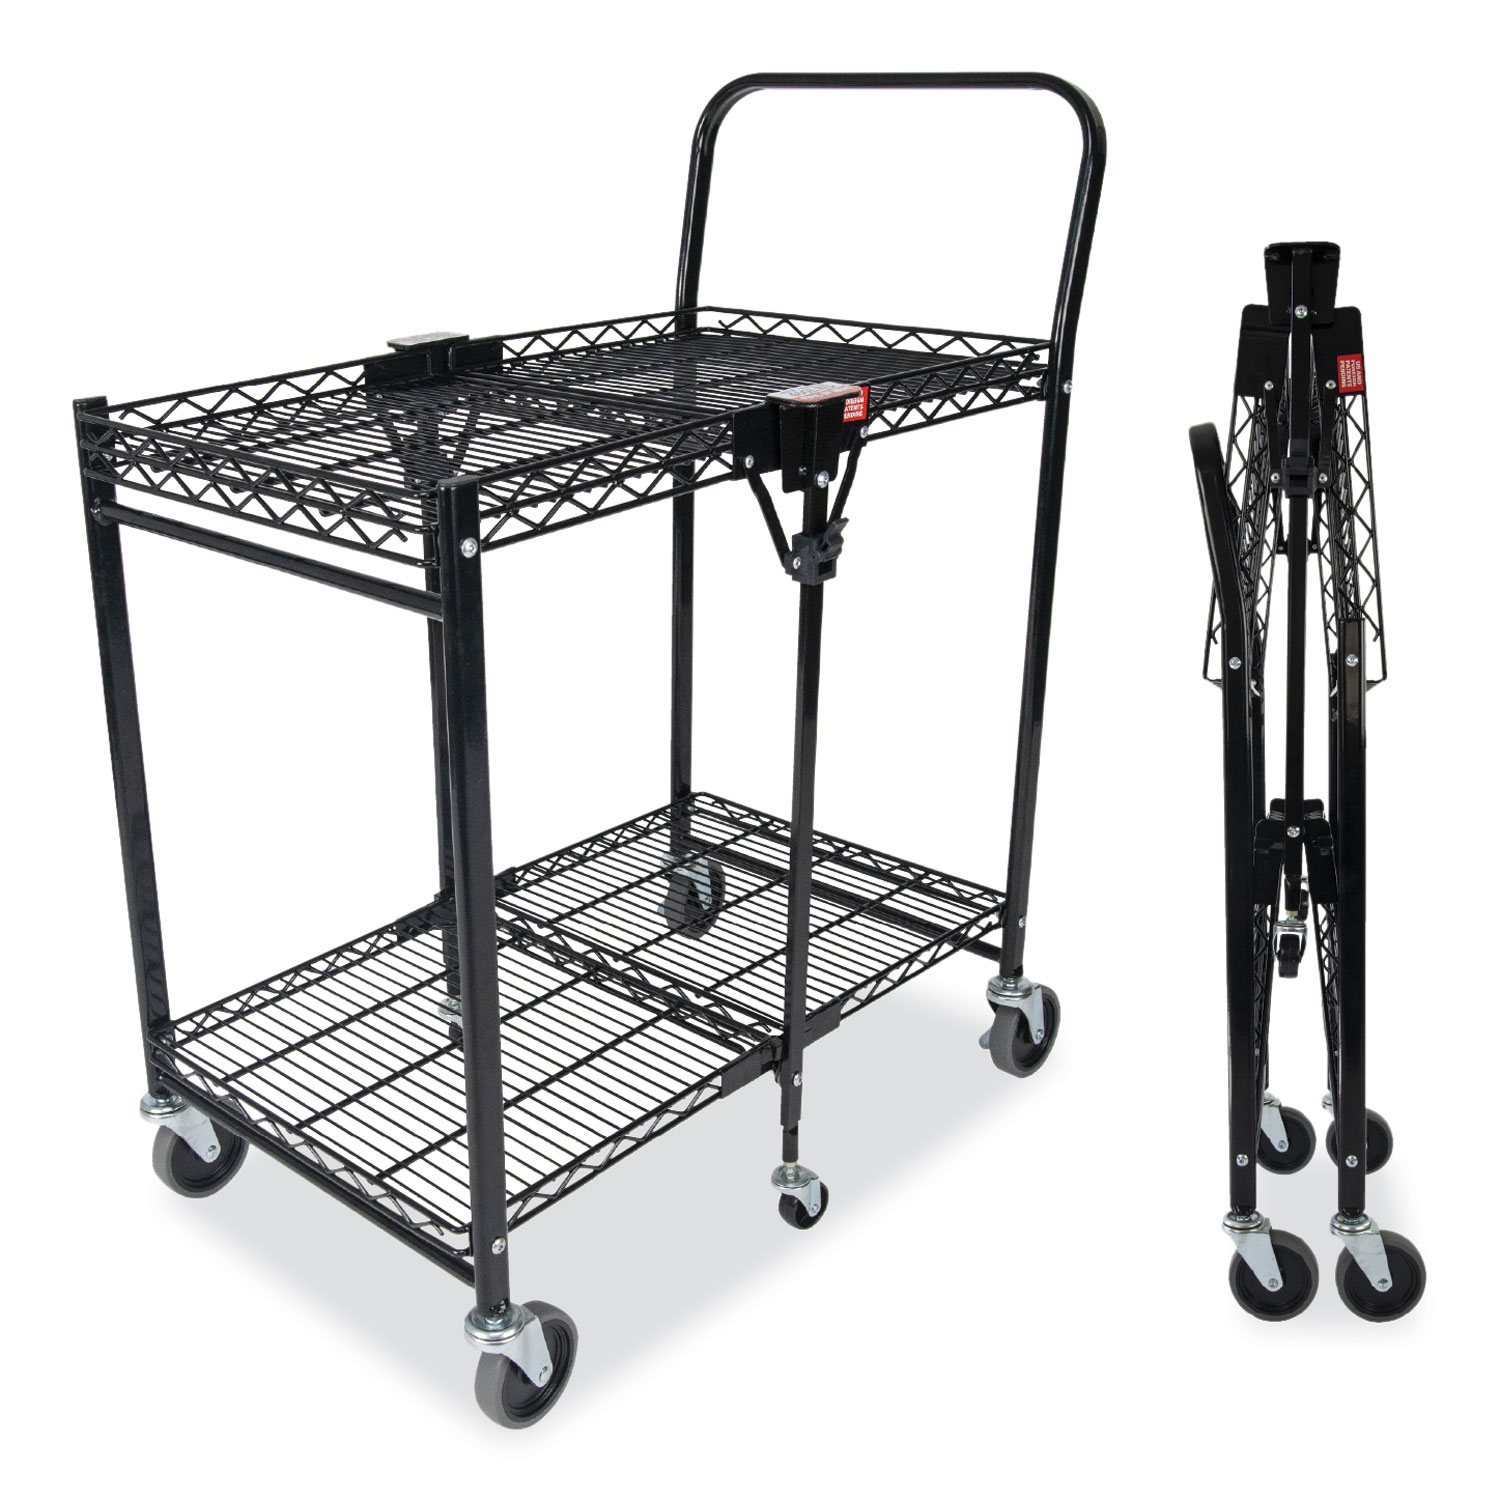 Stowaway Folding Carts, Metal, 2 Shelves, 250 lb Capacity, 29.63 x 37.25  x 18, Black - Office Express Office Products